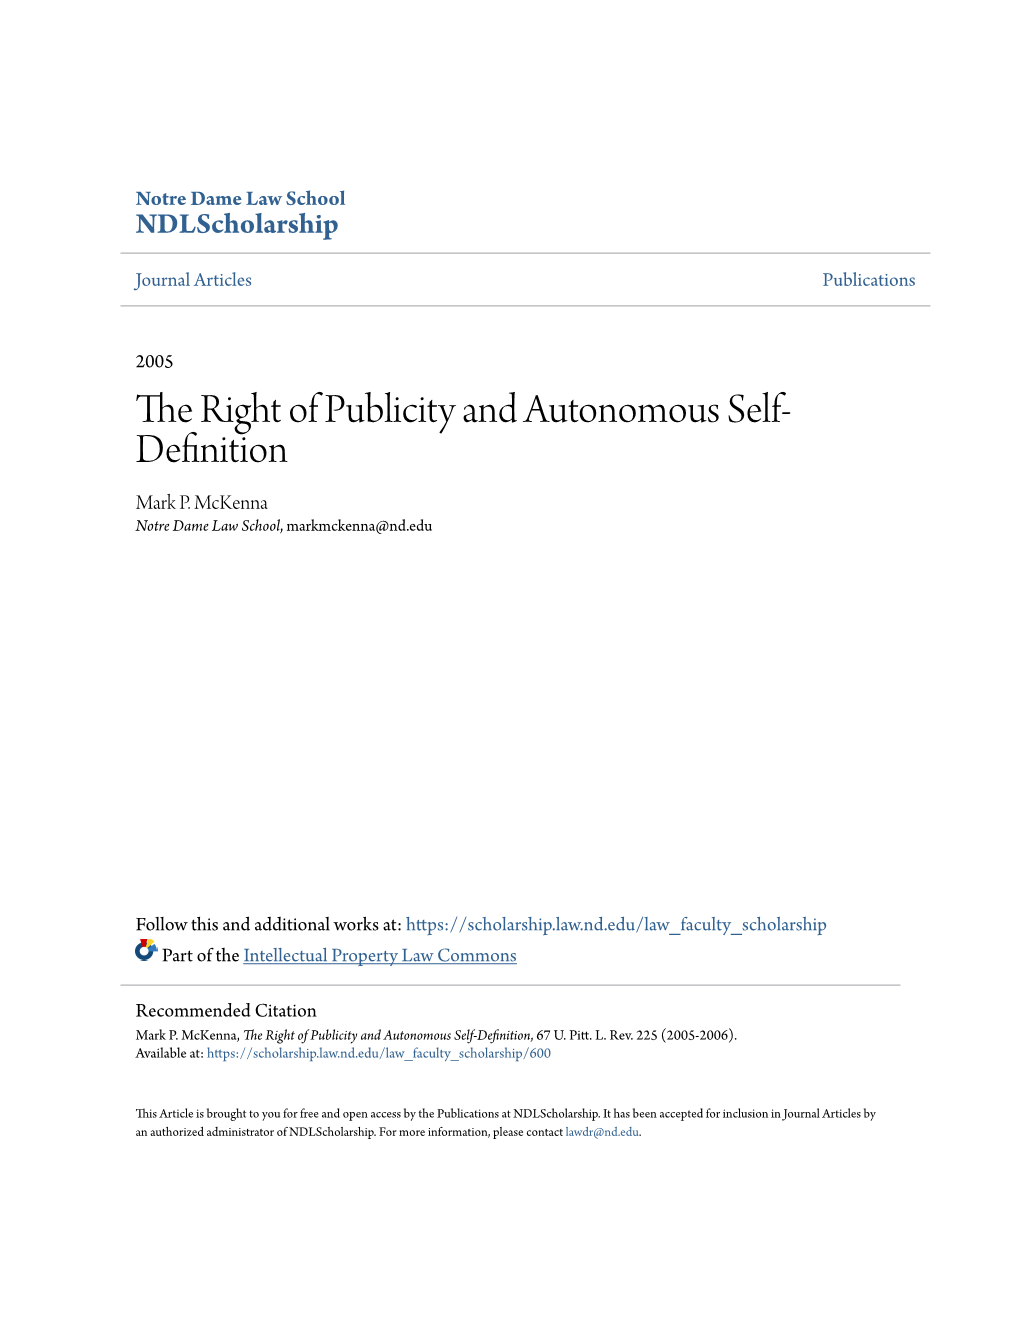 The Right of Publicity and Autonomous Self-Definition, 67 U